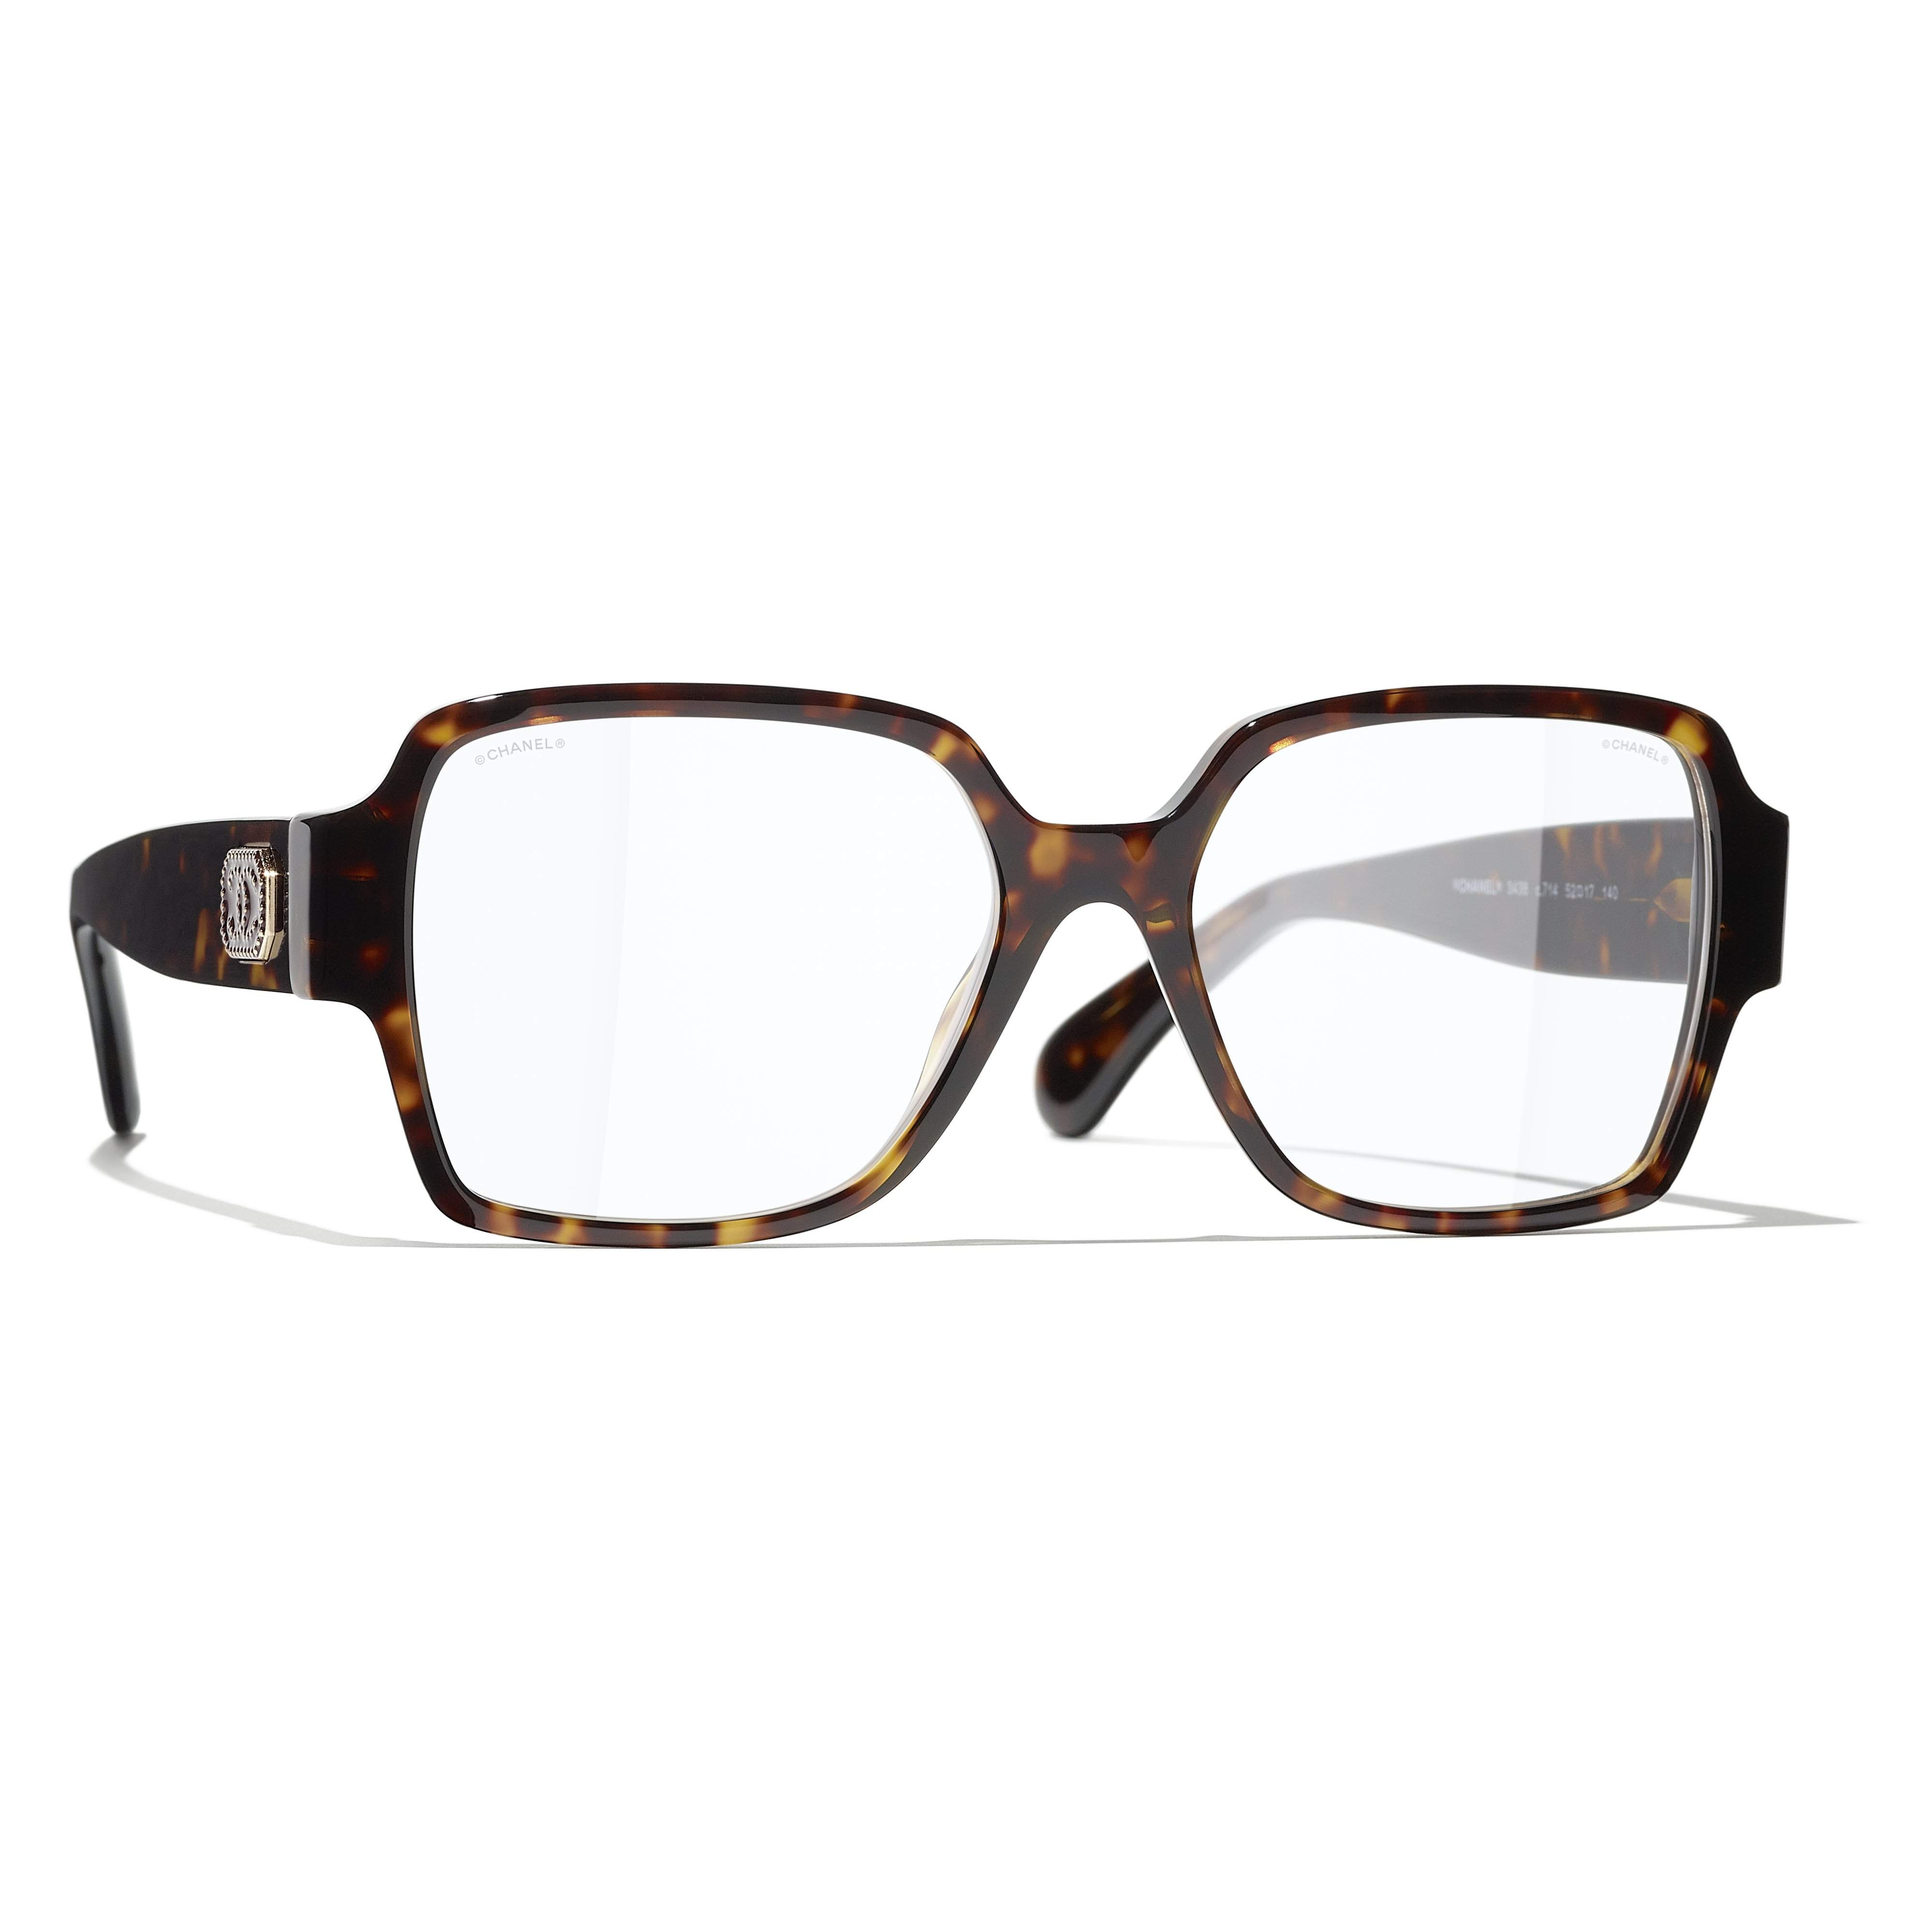 Eyeglasses CHANEL CH3438 C714 54-17 Dark Tortoise in stock, Price 208,33 €